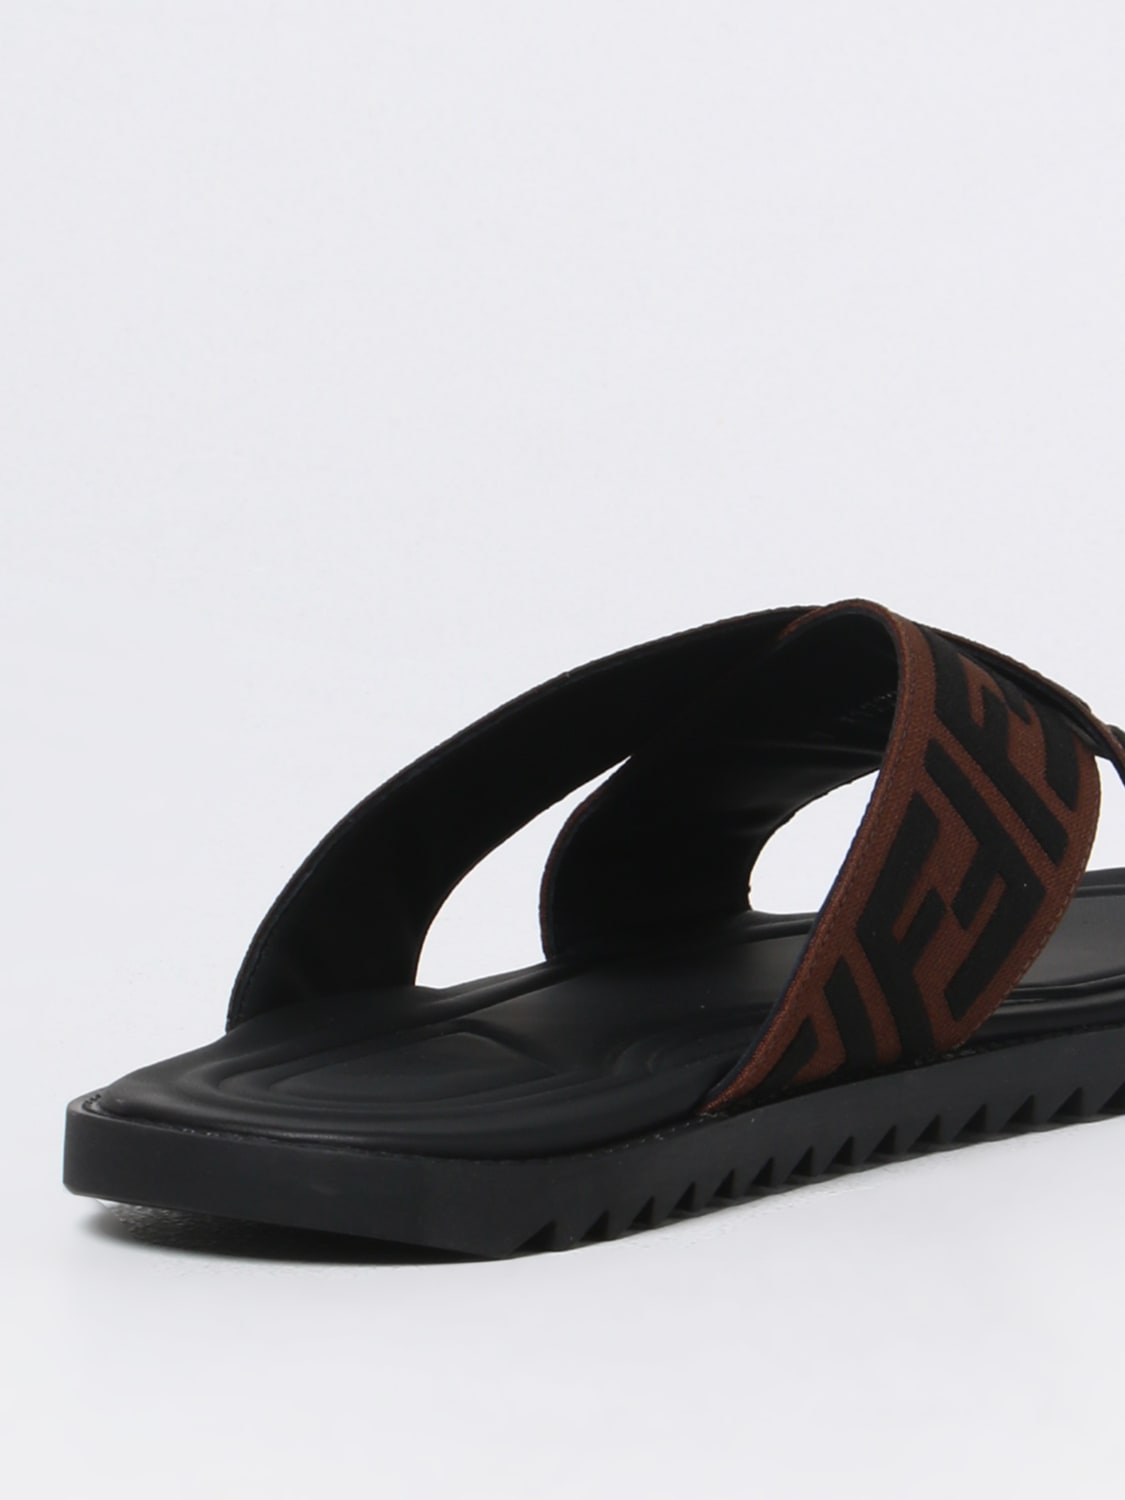 FENDI: fabric slides with embossed monogram - Brown | Fendi sandals ...